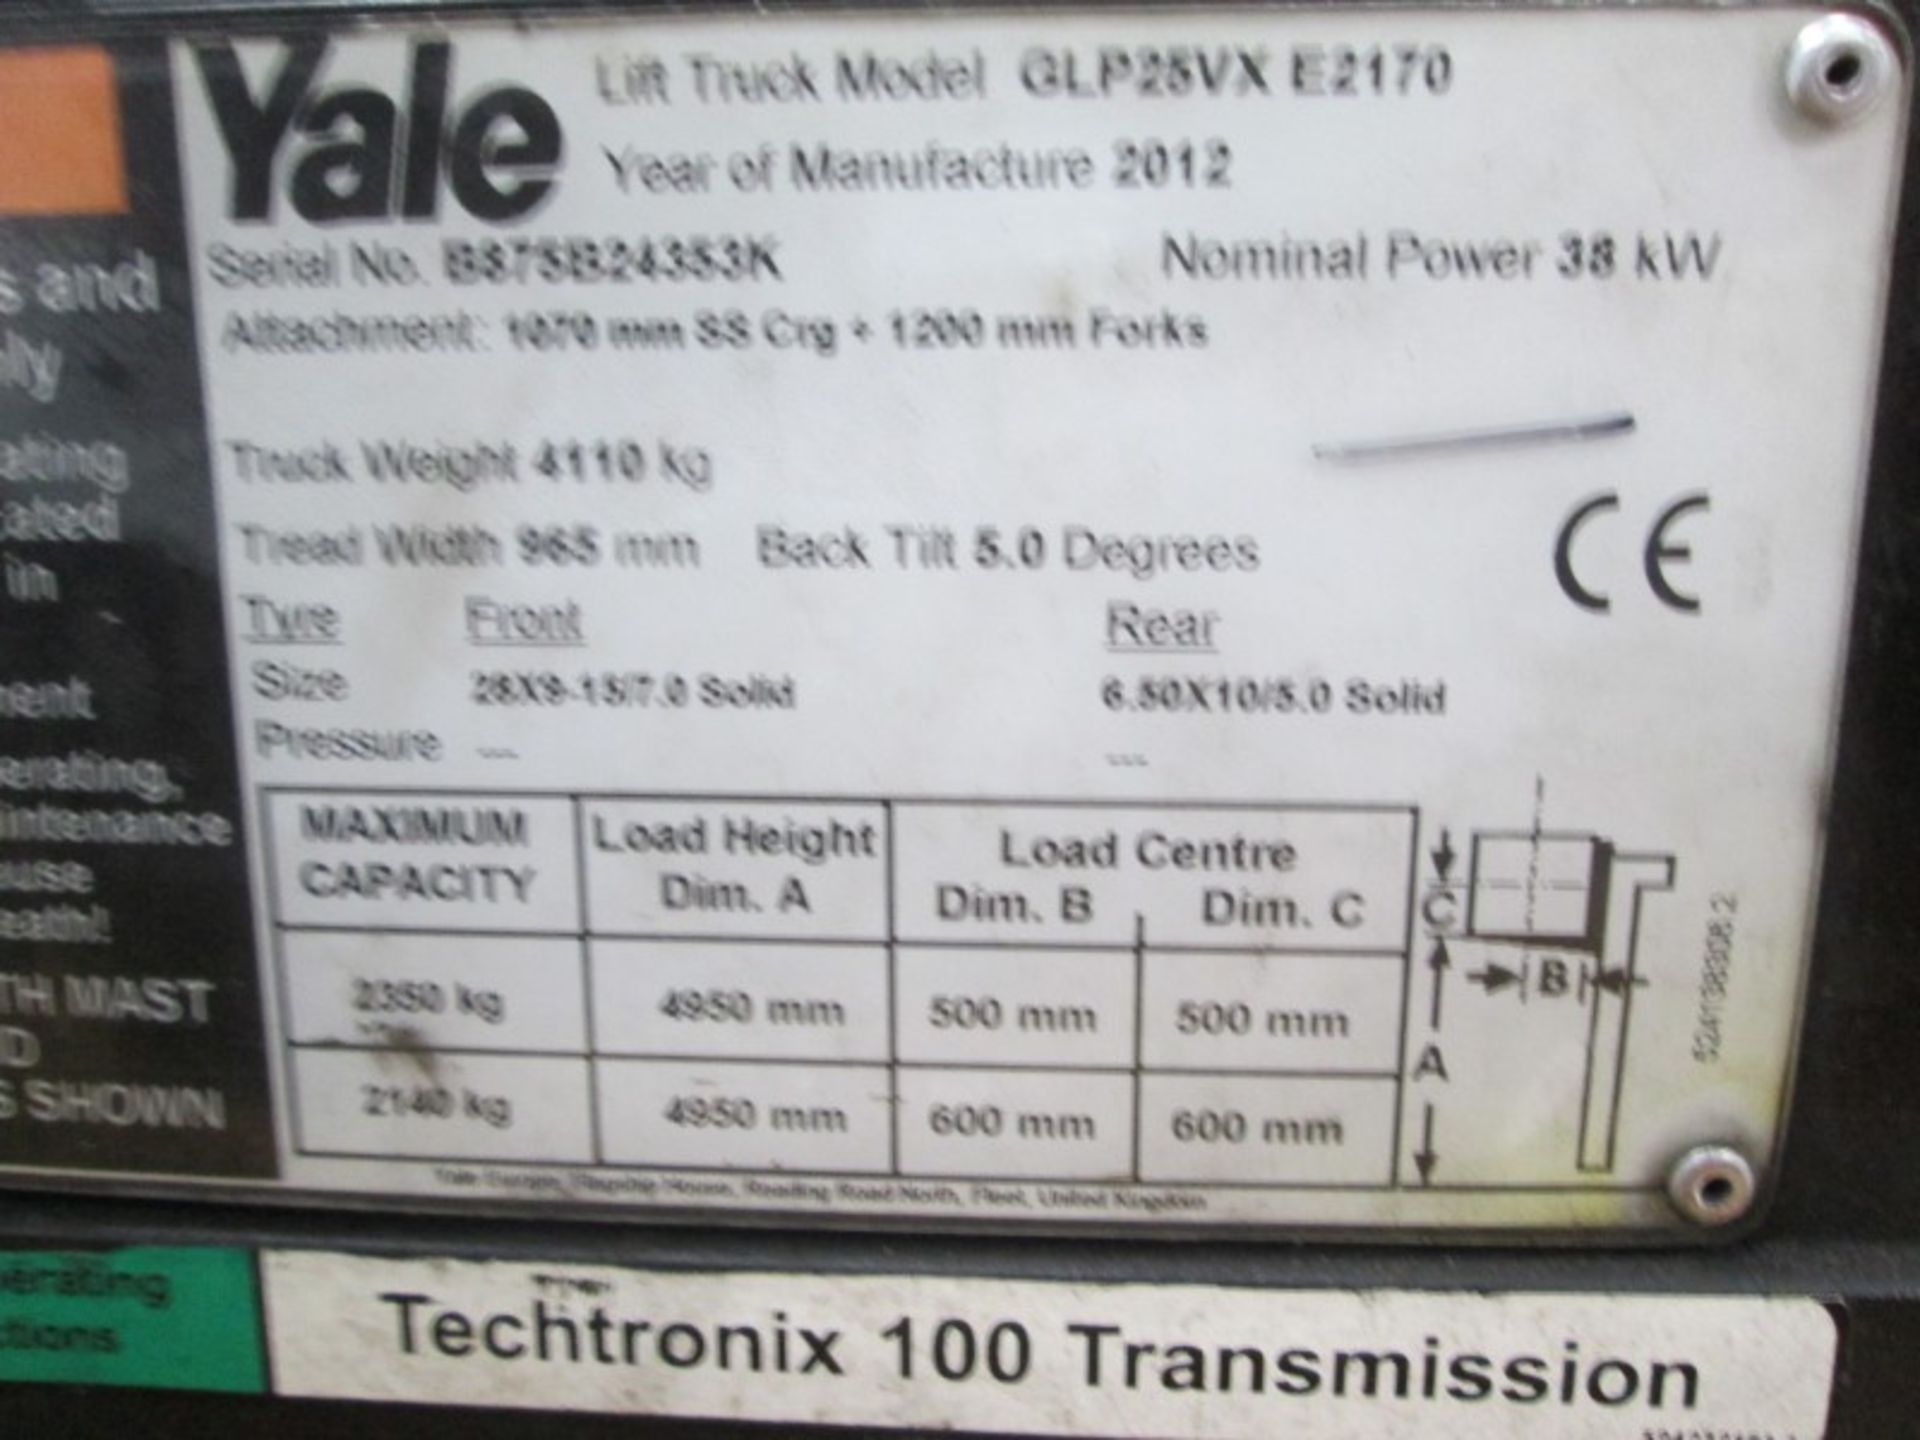 YALE GLP25VX E2170 Plant LPG / CNG - VIN: B875B24353K - Year: 2012 - no display km - Triplex 4.9M - Image 8 of 8